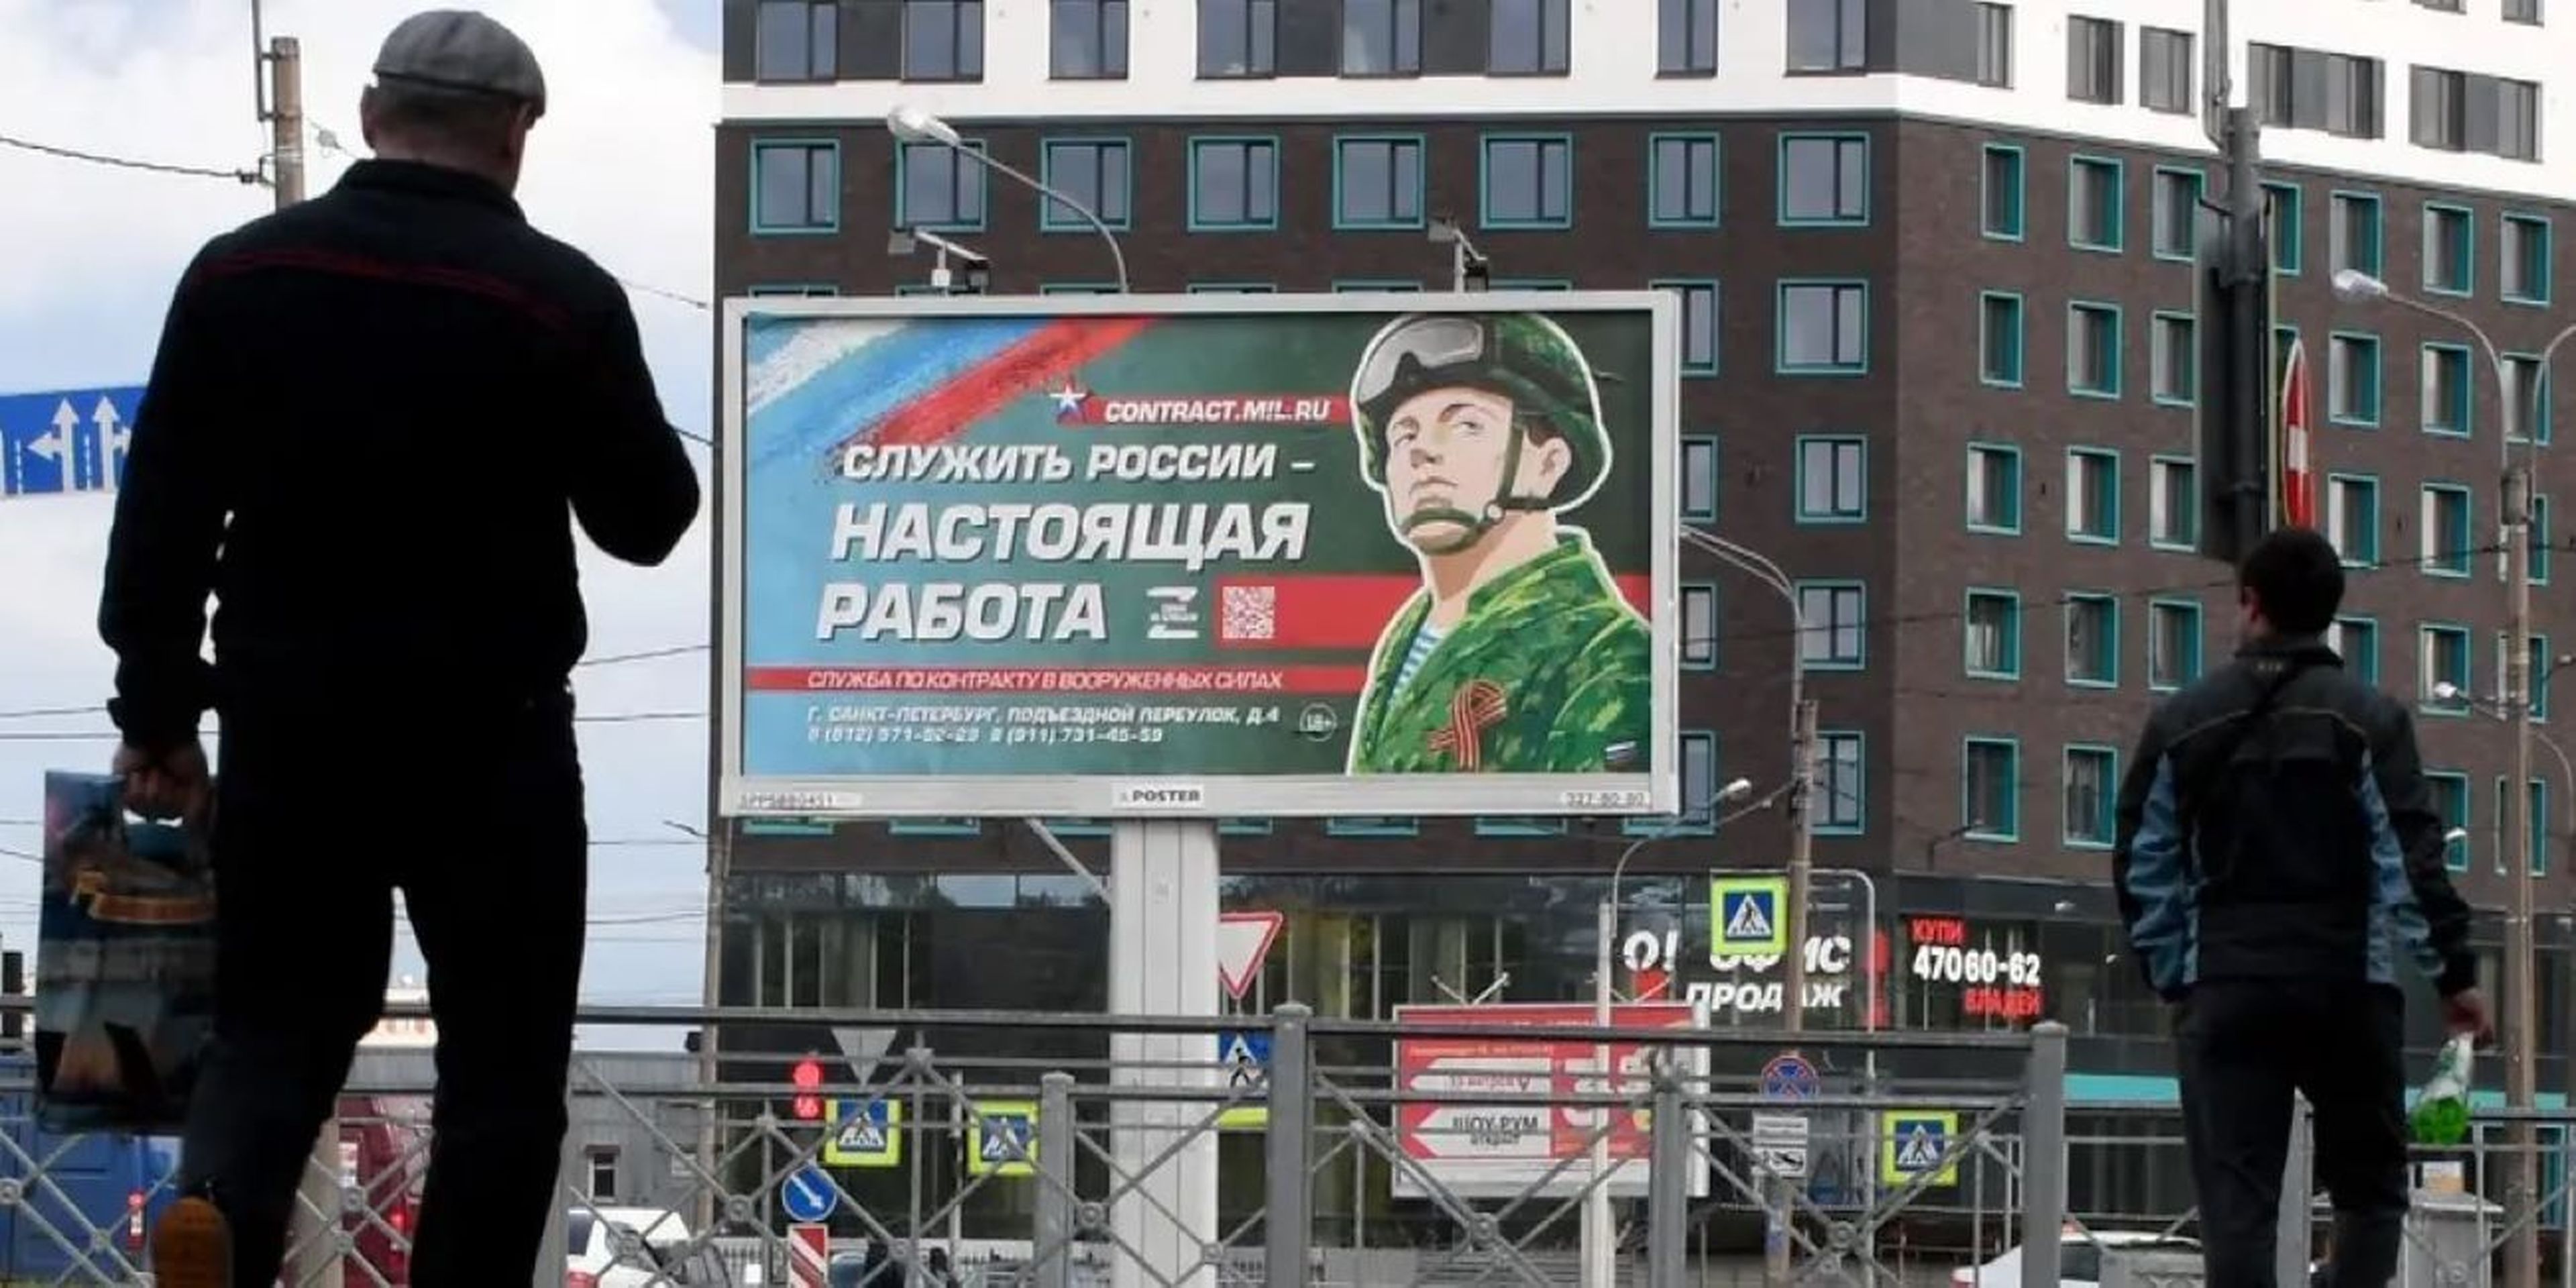 Valla publicitaria del ejército ruso